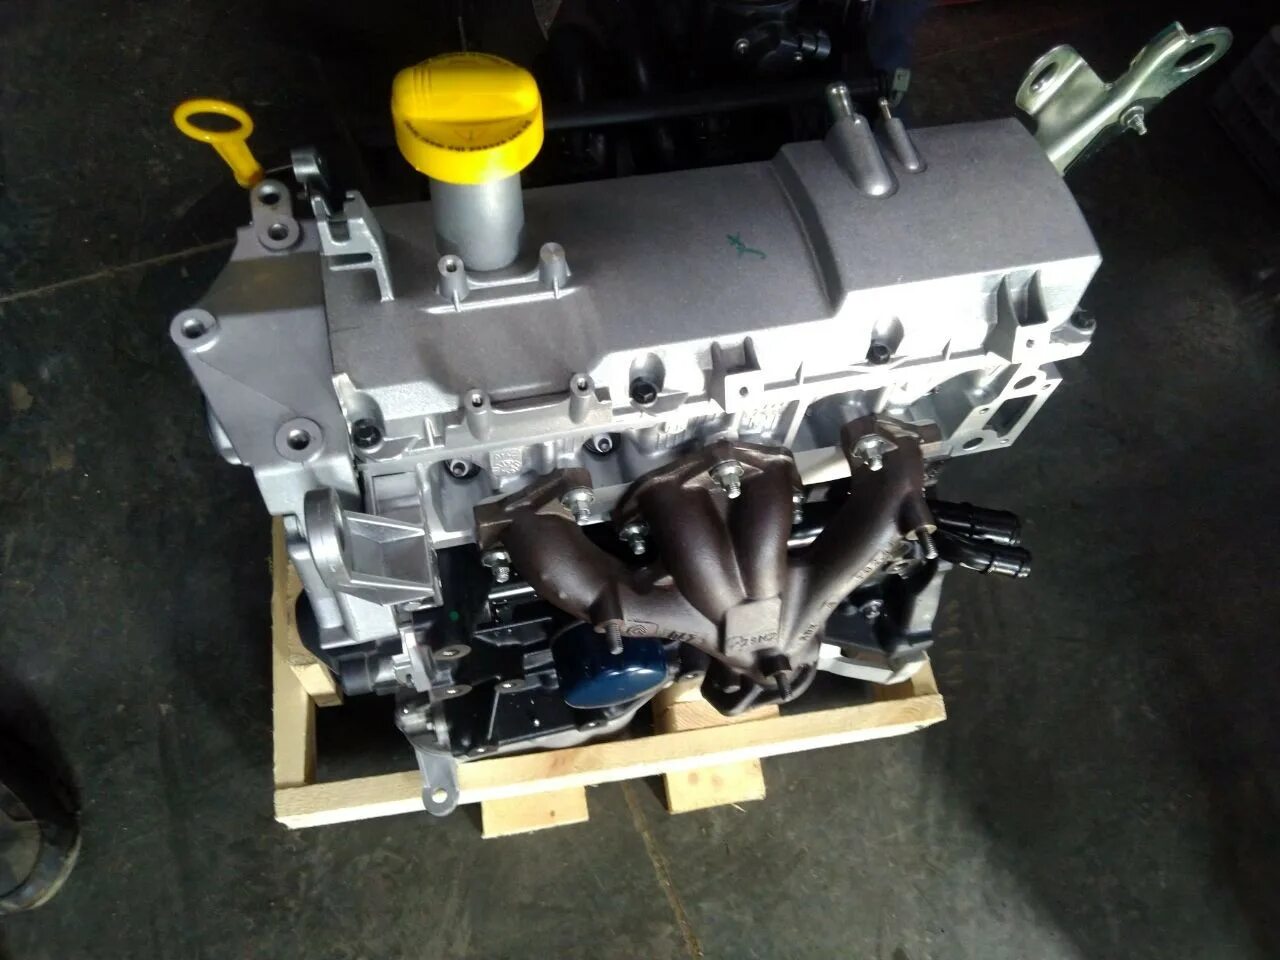 Renault 1.6 k7m. Двигатель Renault k7m. Двигатель Логан k7m. Рено двигателя k7m 710. Двигатель Логан 1.4 k7j710.